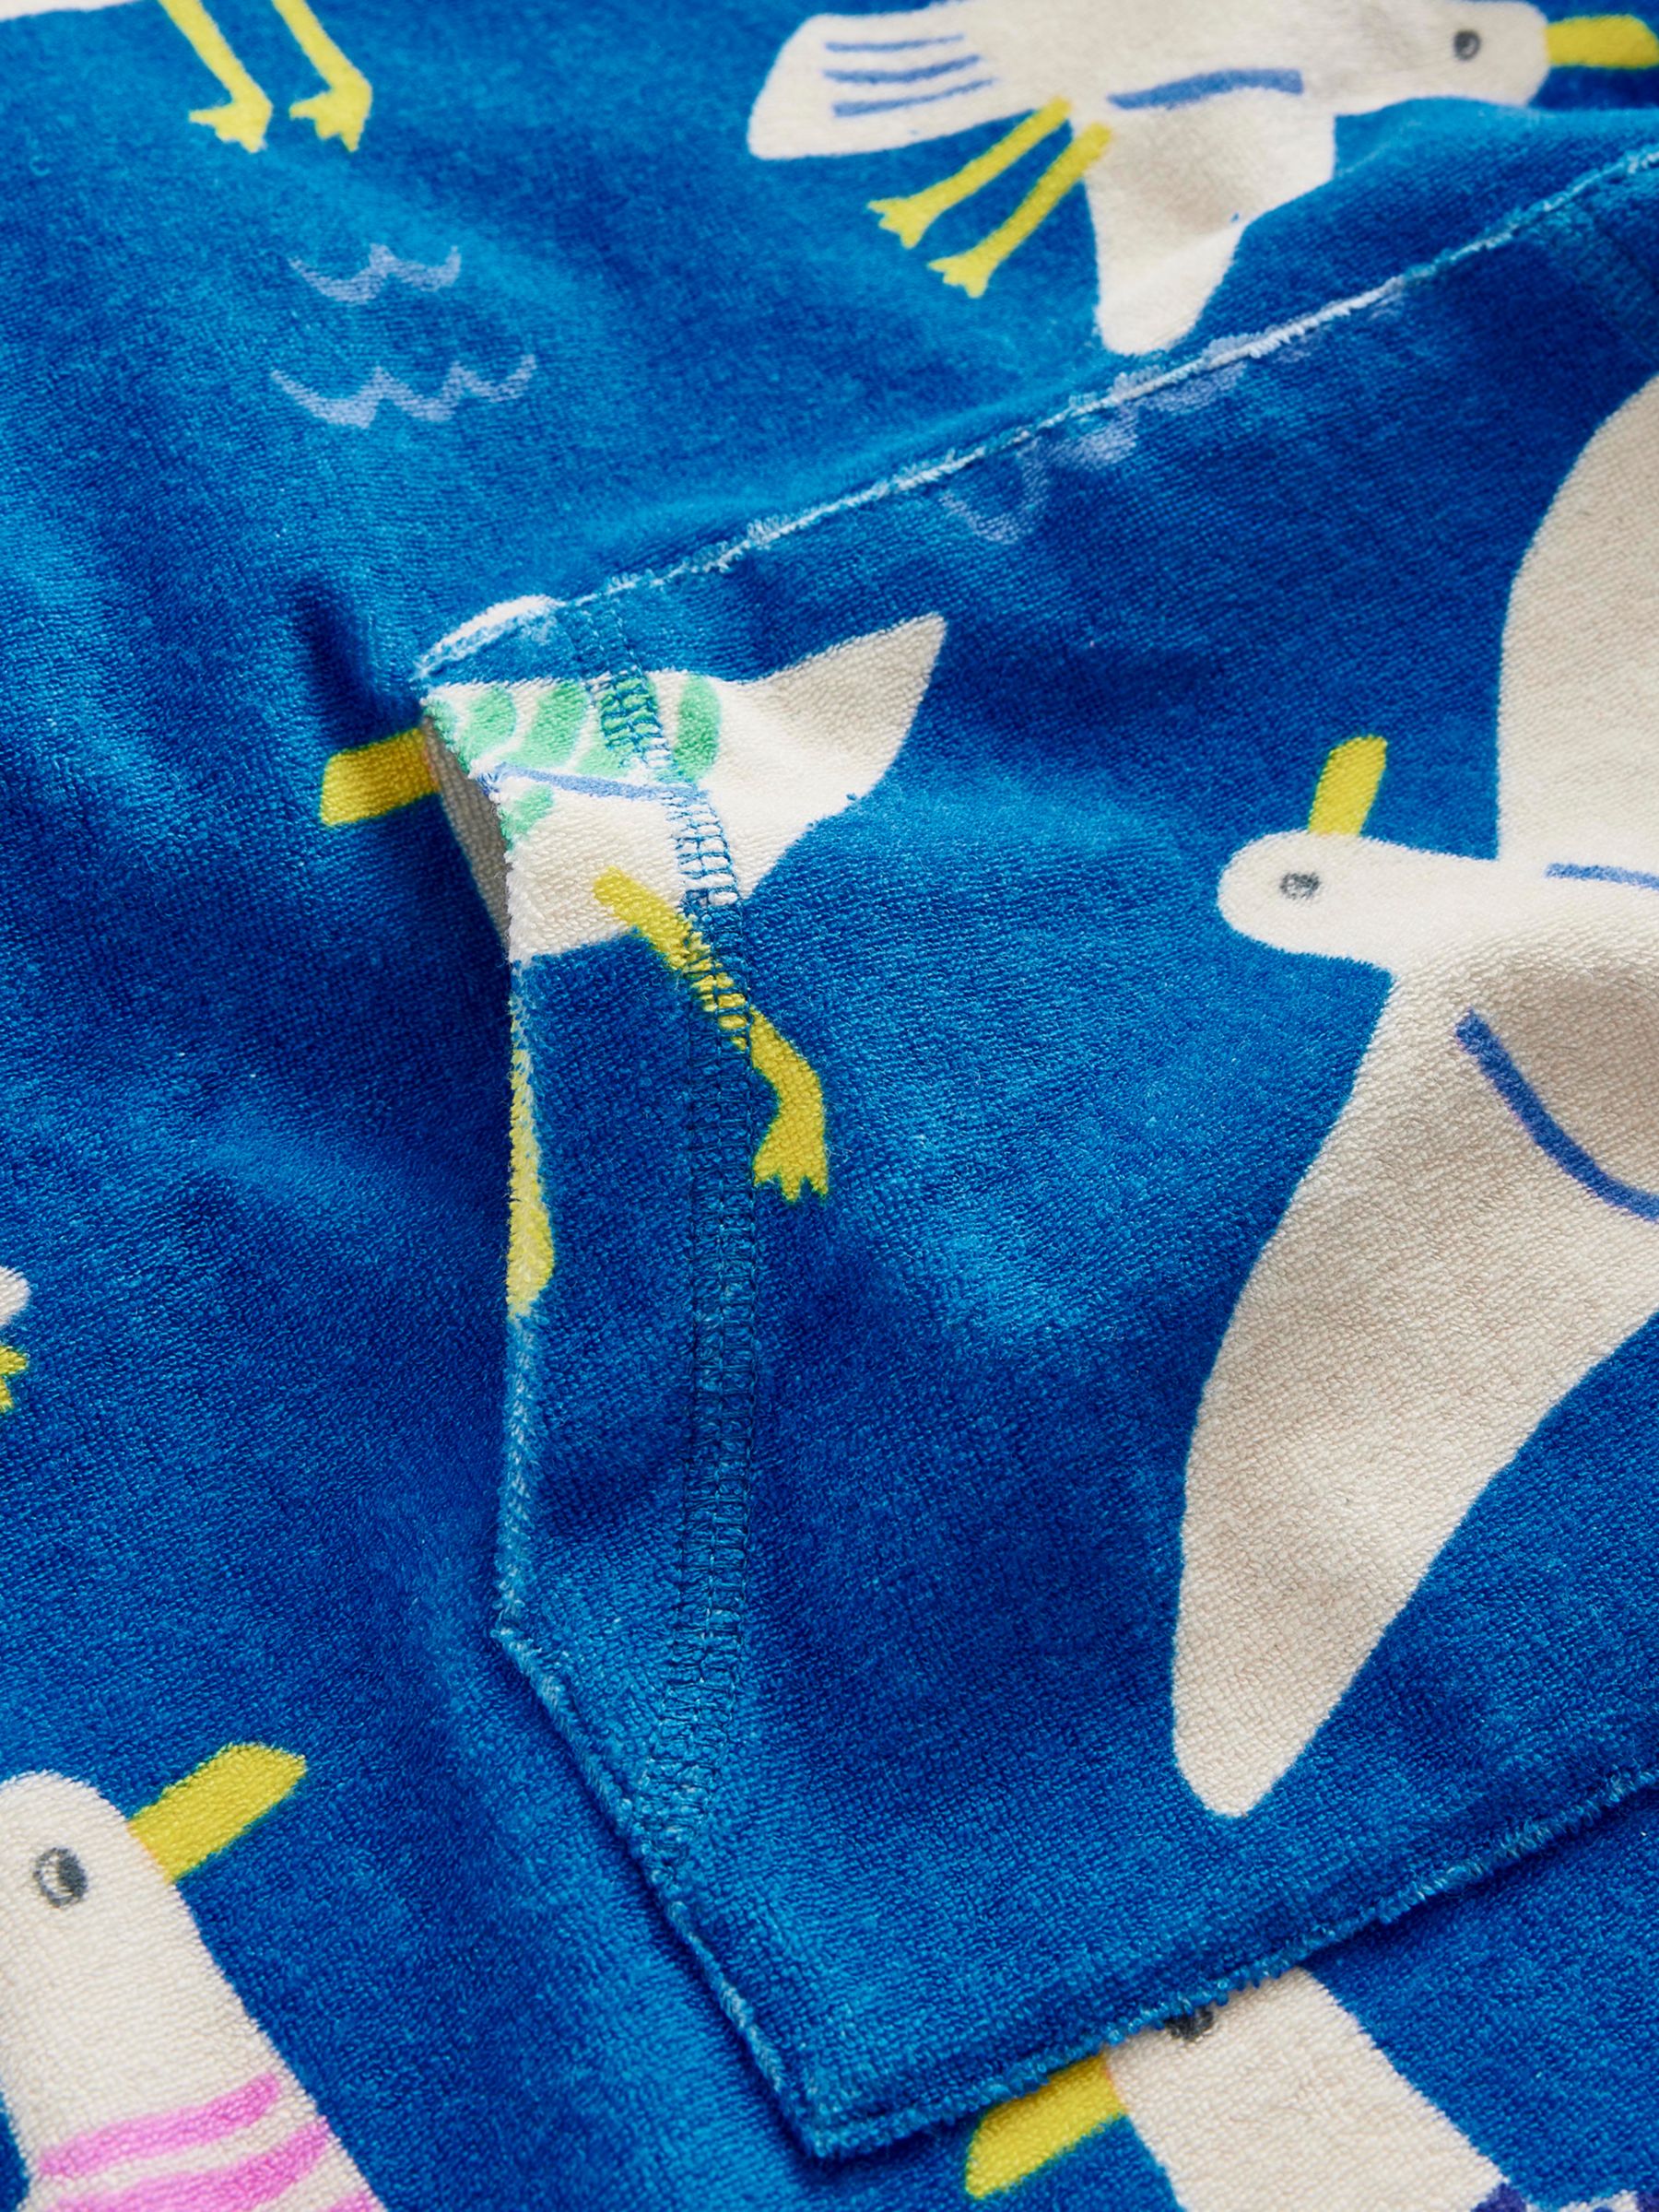 Mini Boden Kids' Seagull Towelling Hooded Beach Dress, Blue/Multi, 2-3 years